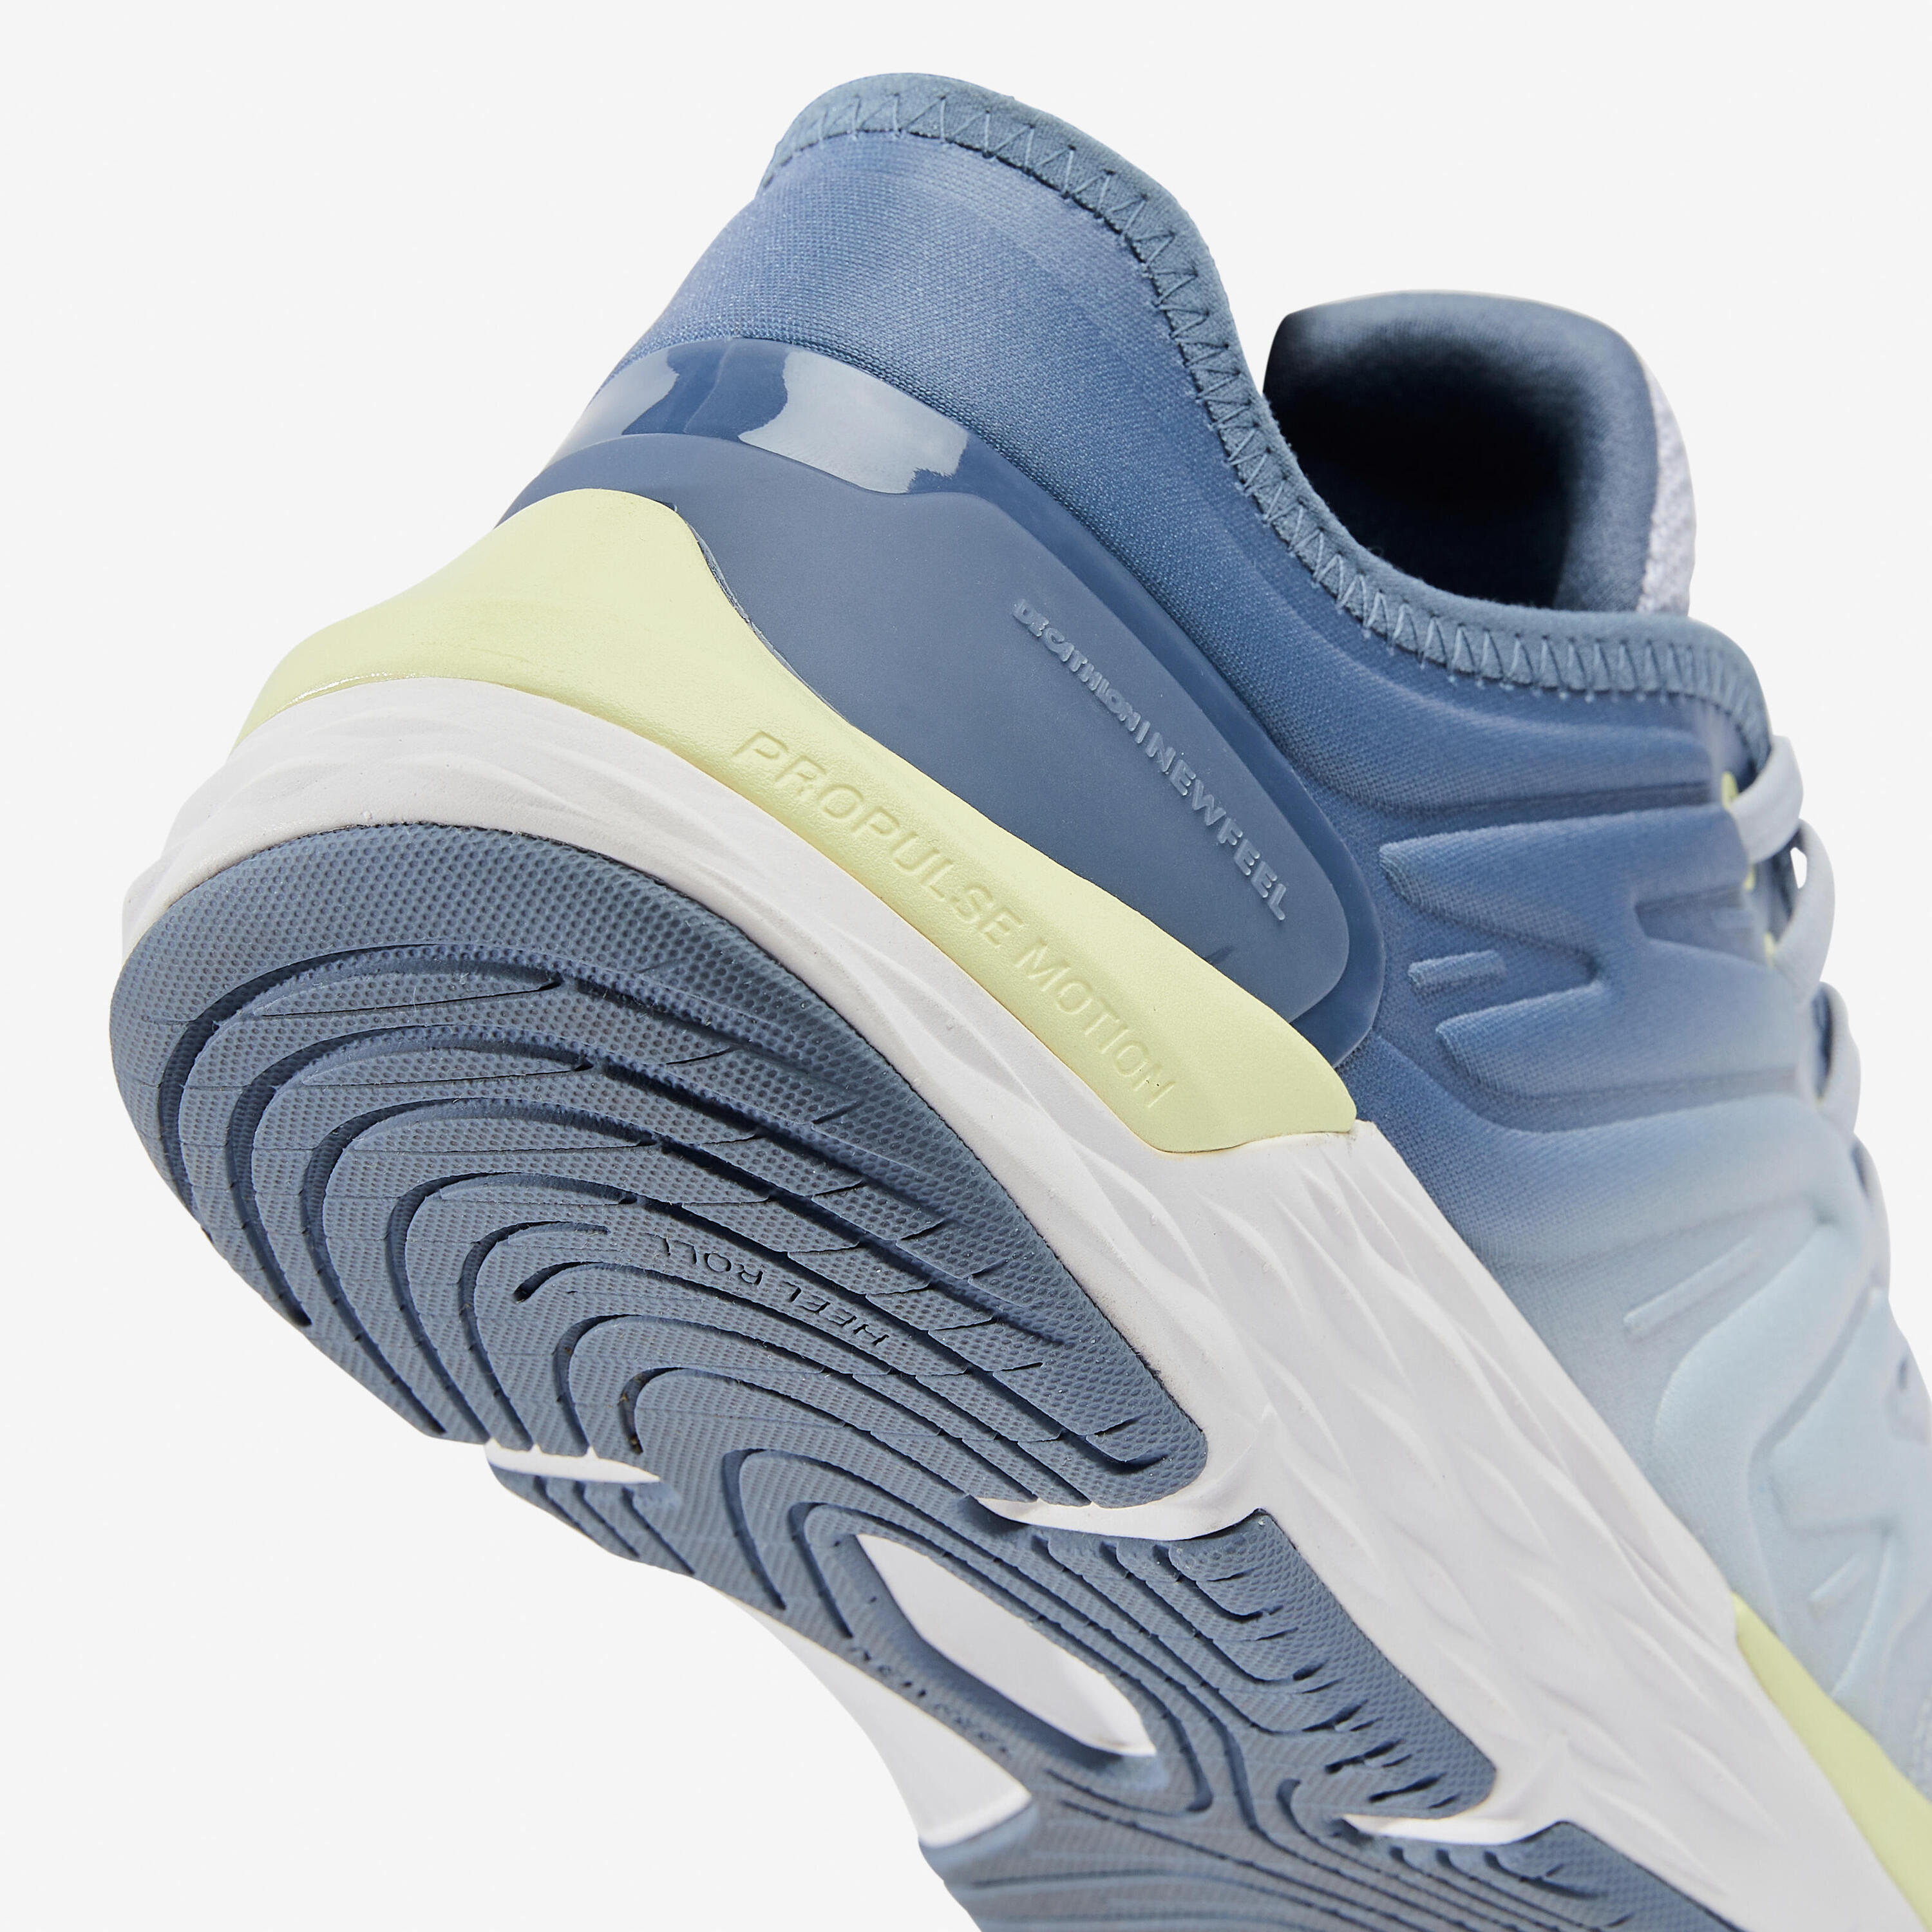 Fitness Walking Shoes Sportwalk Comfort - blue/grey 3/7